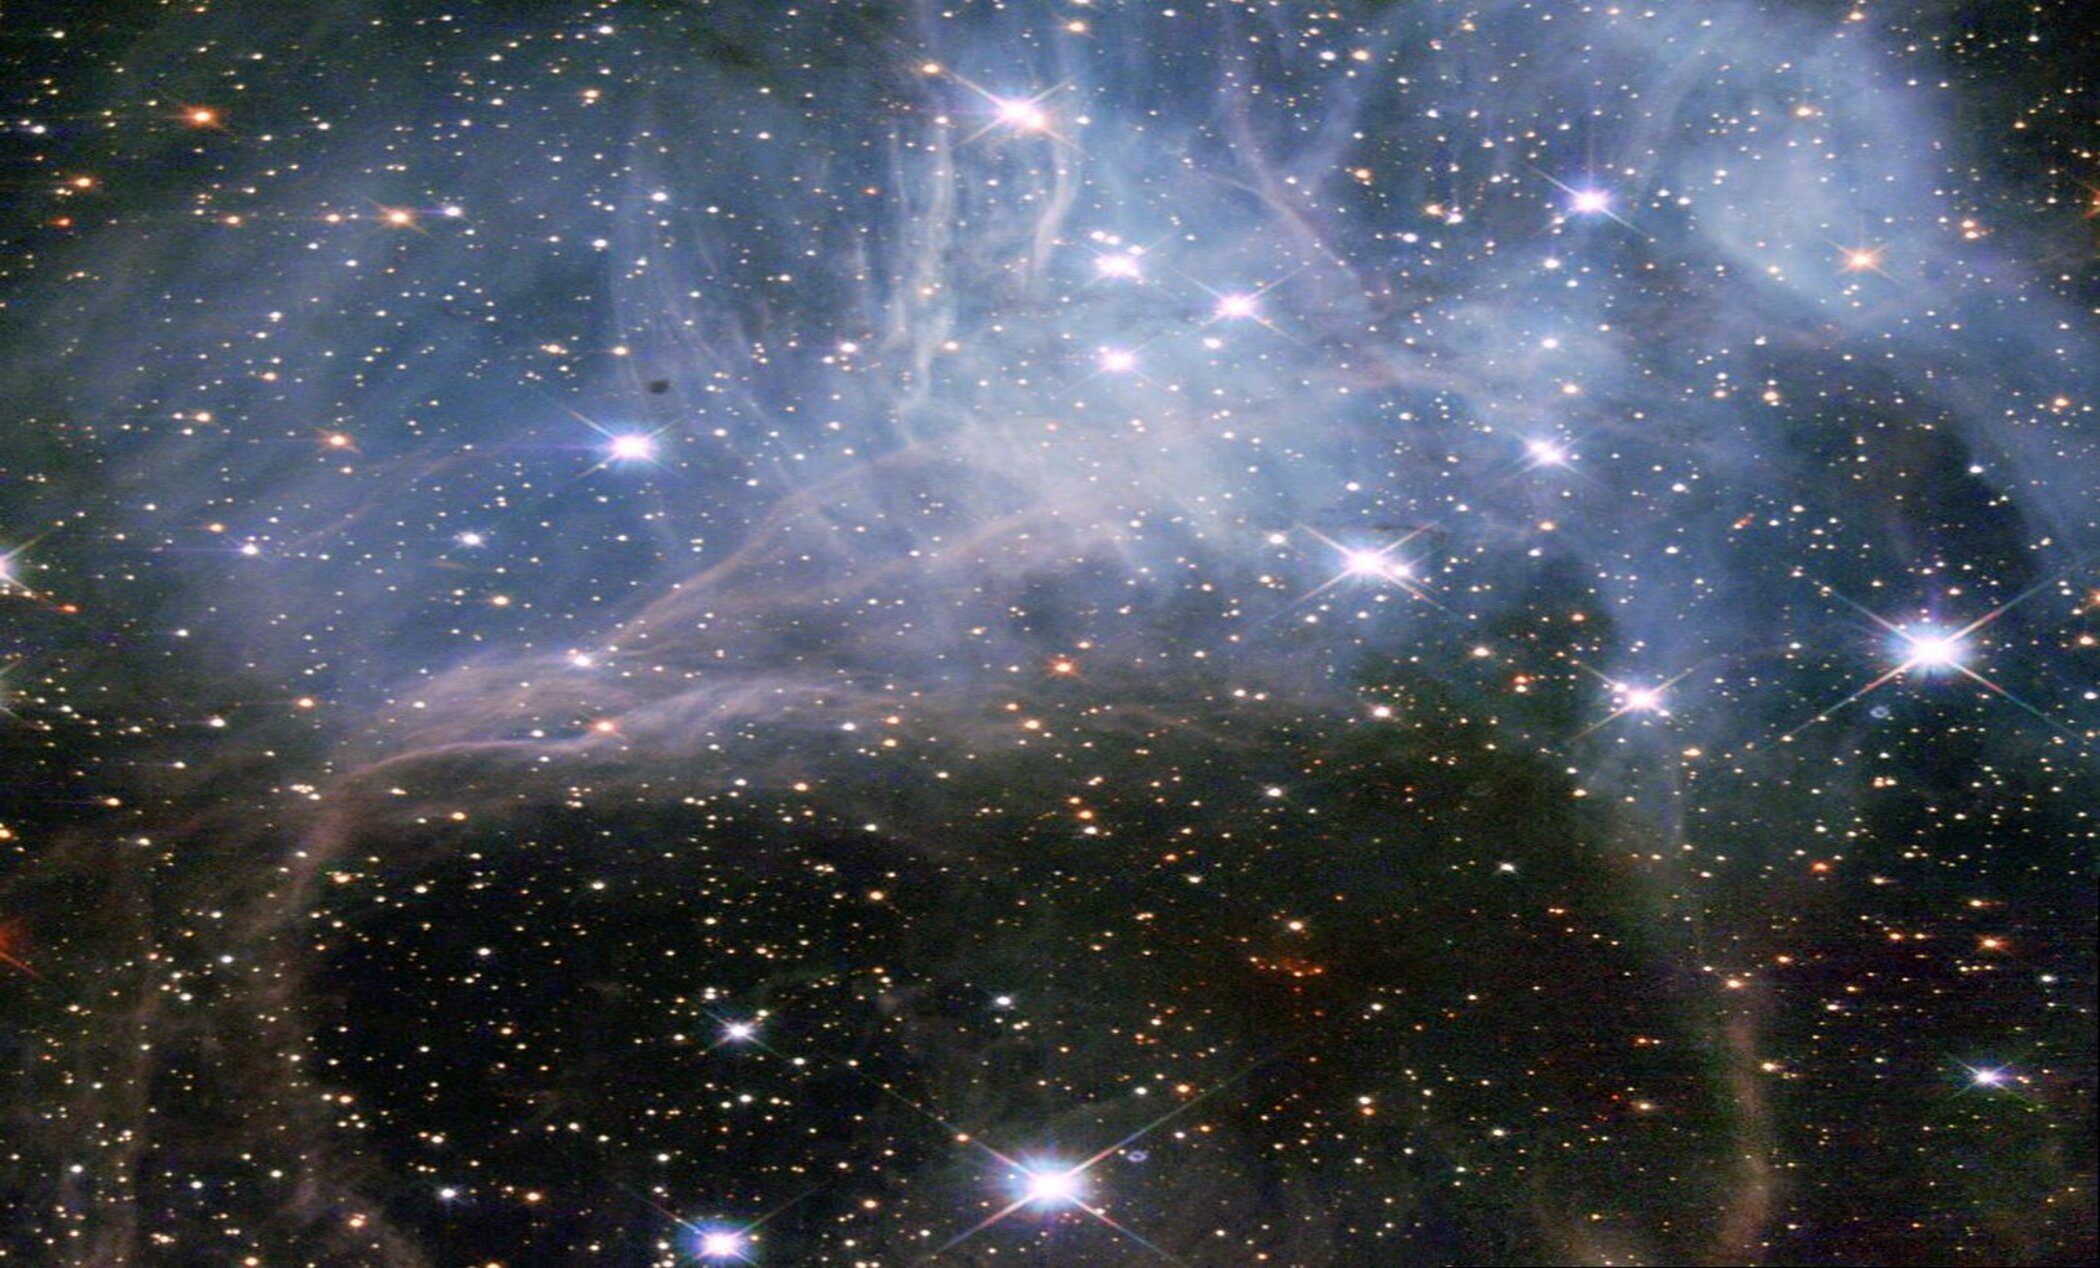 Hubble Space Telescope Captures Mesmerising Stellar Grouping In Large Magellanic Cloud